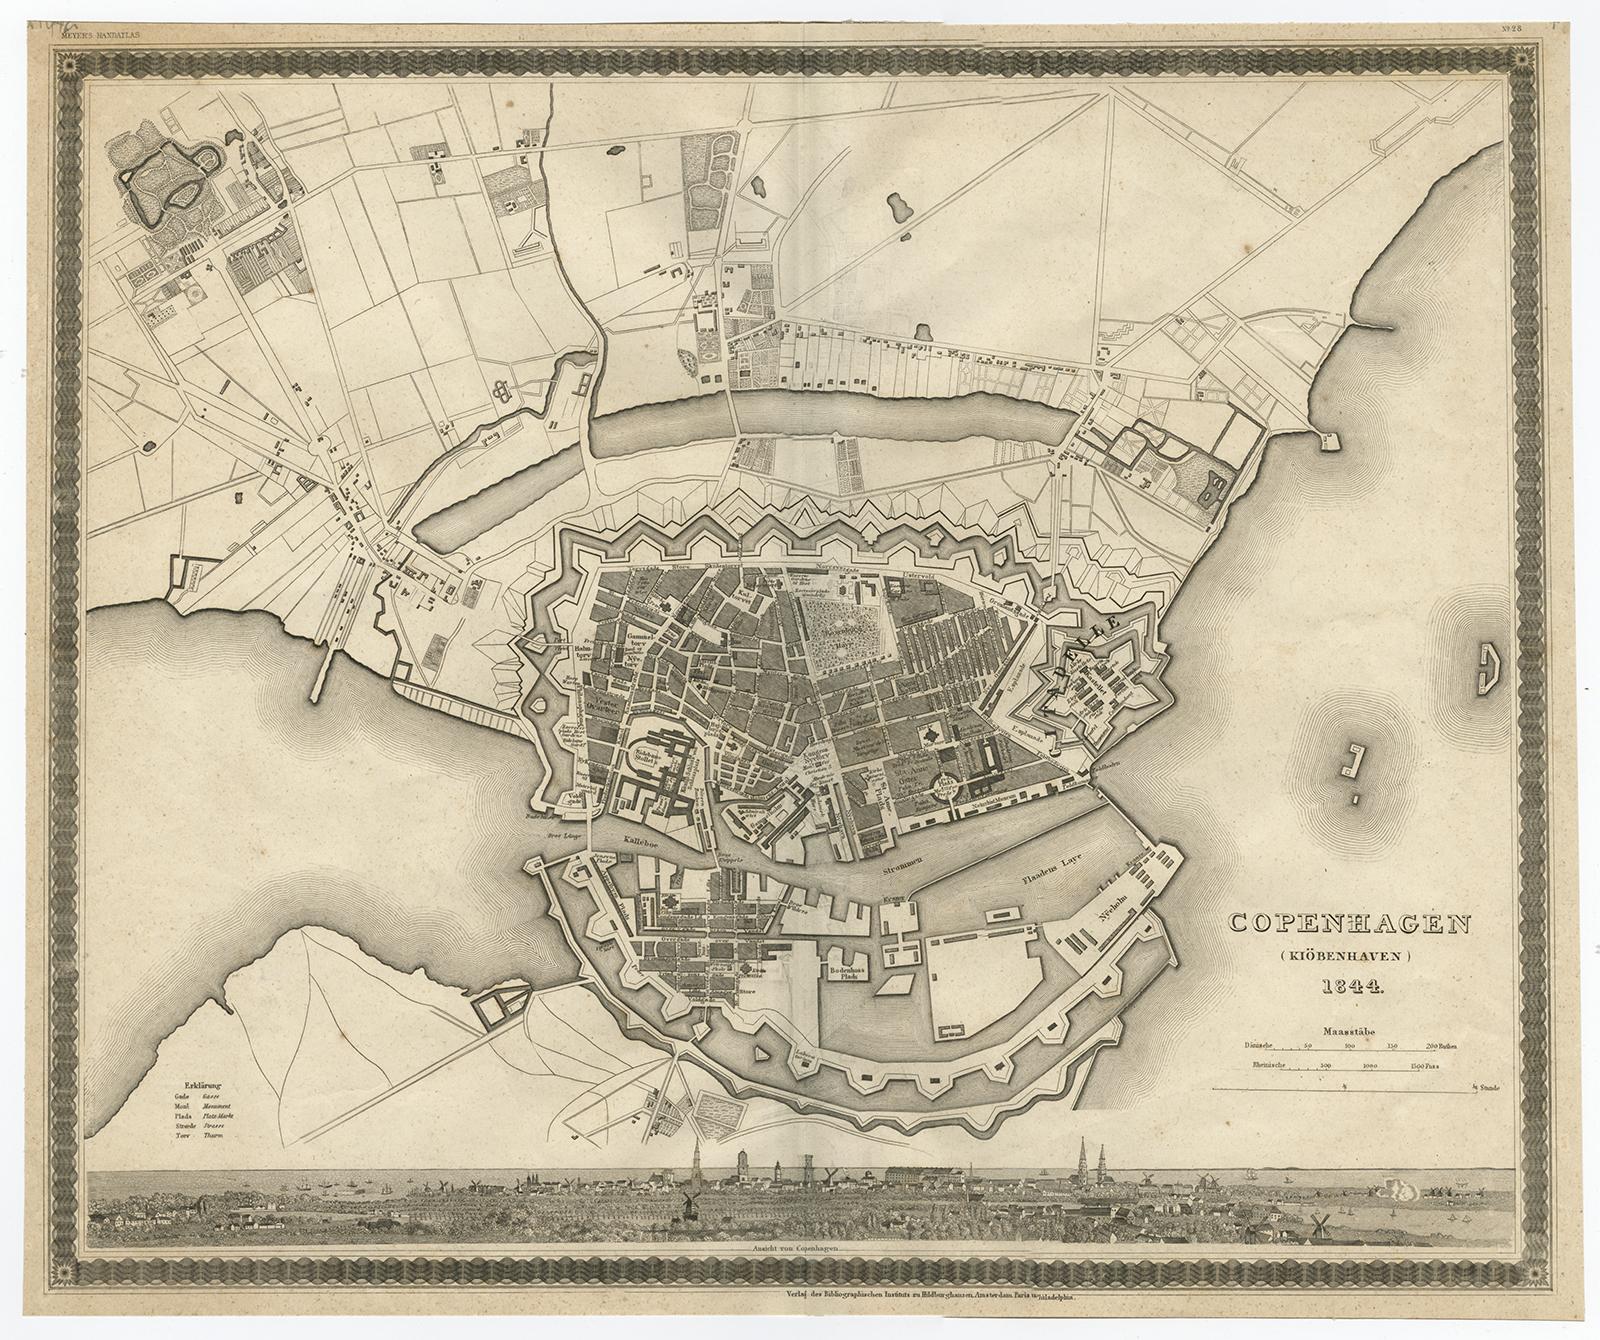 Antique map titled 'Copenhagen (Kiöbenhaven)'. With city view and German explanation. Originates from Meyer's Handatlas.